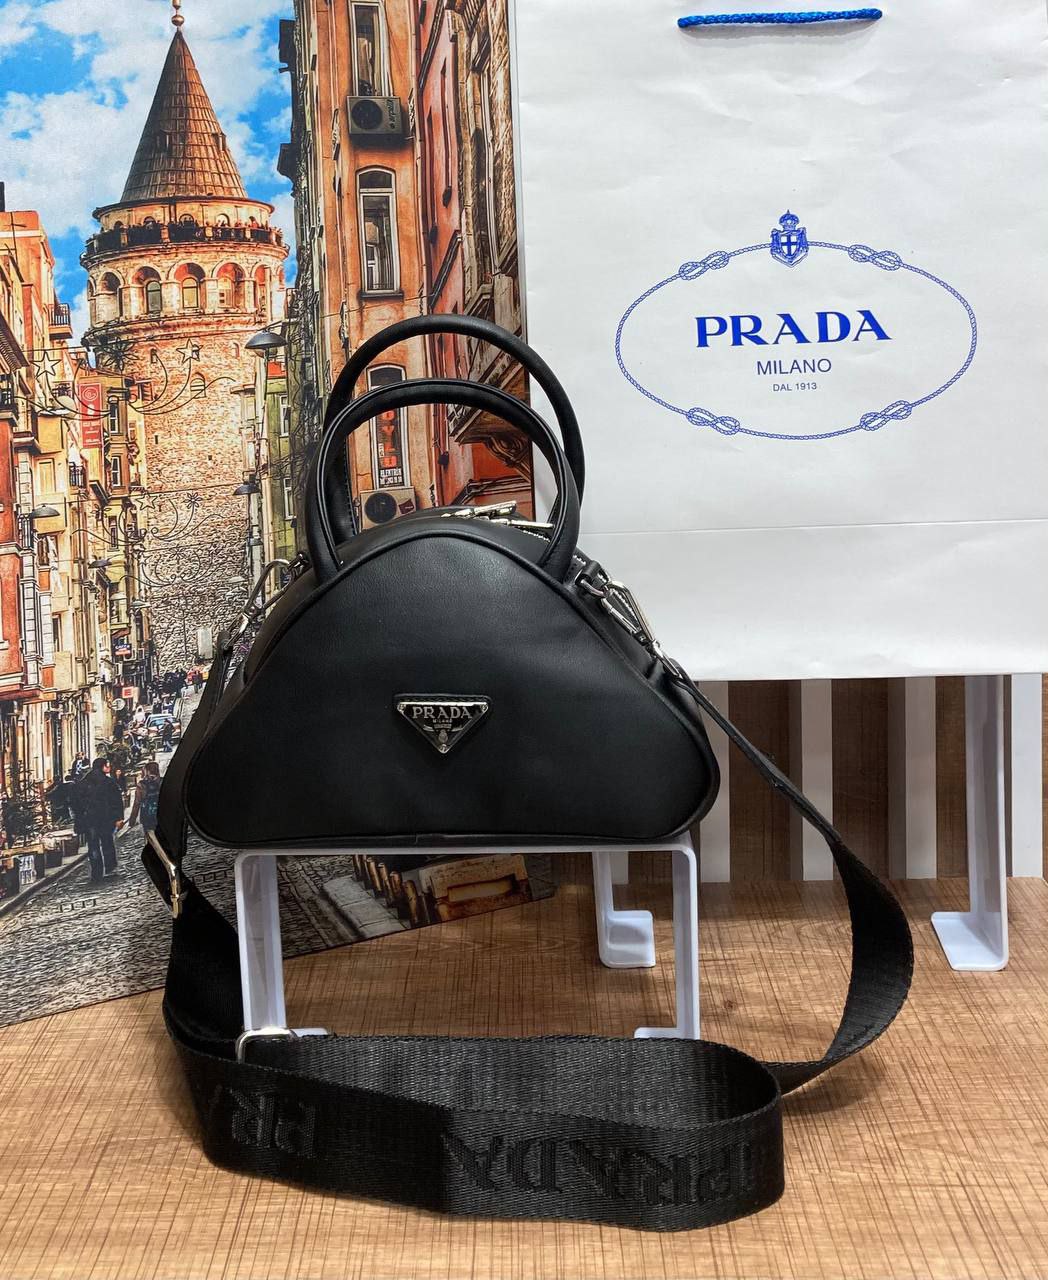 Prada Milano Handbag